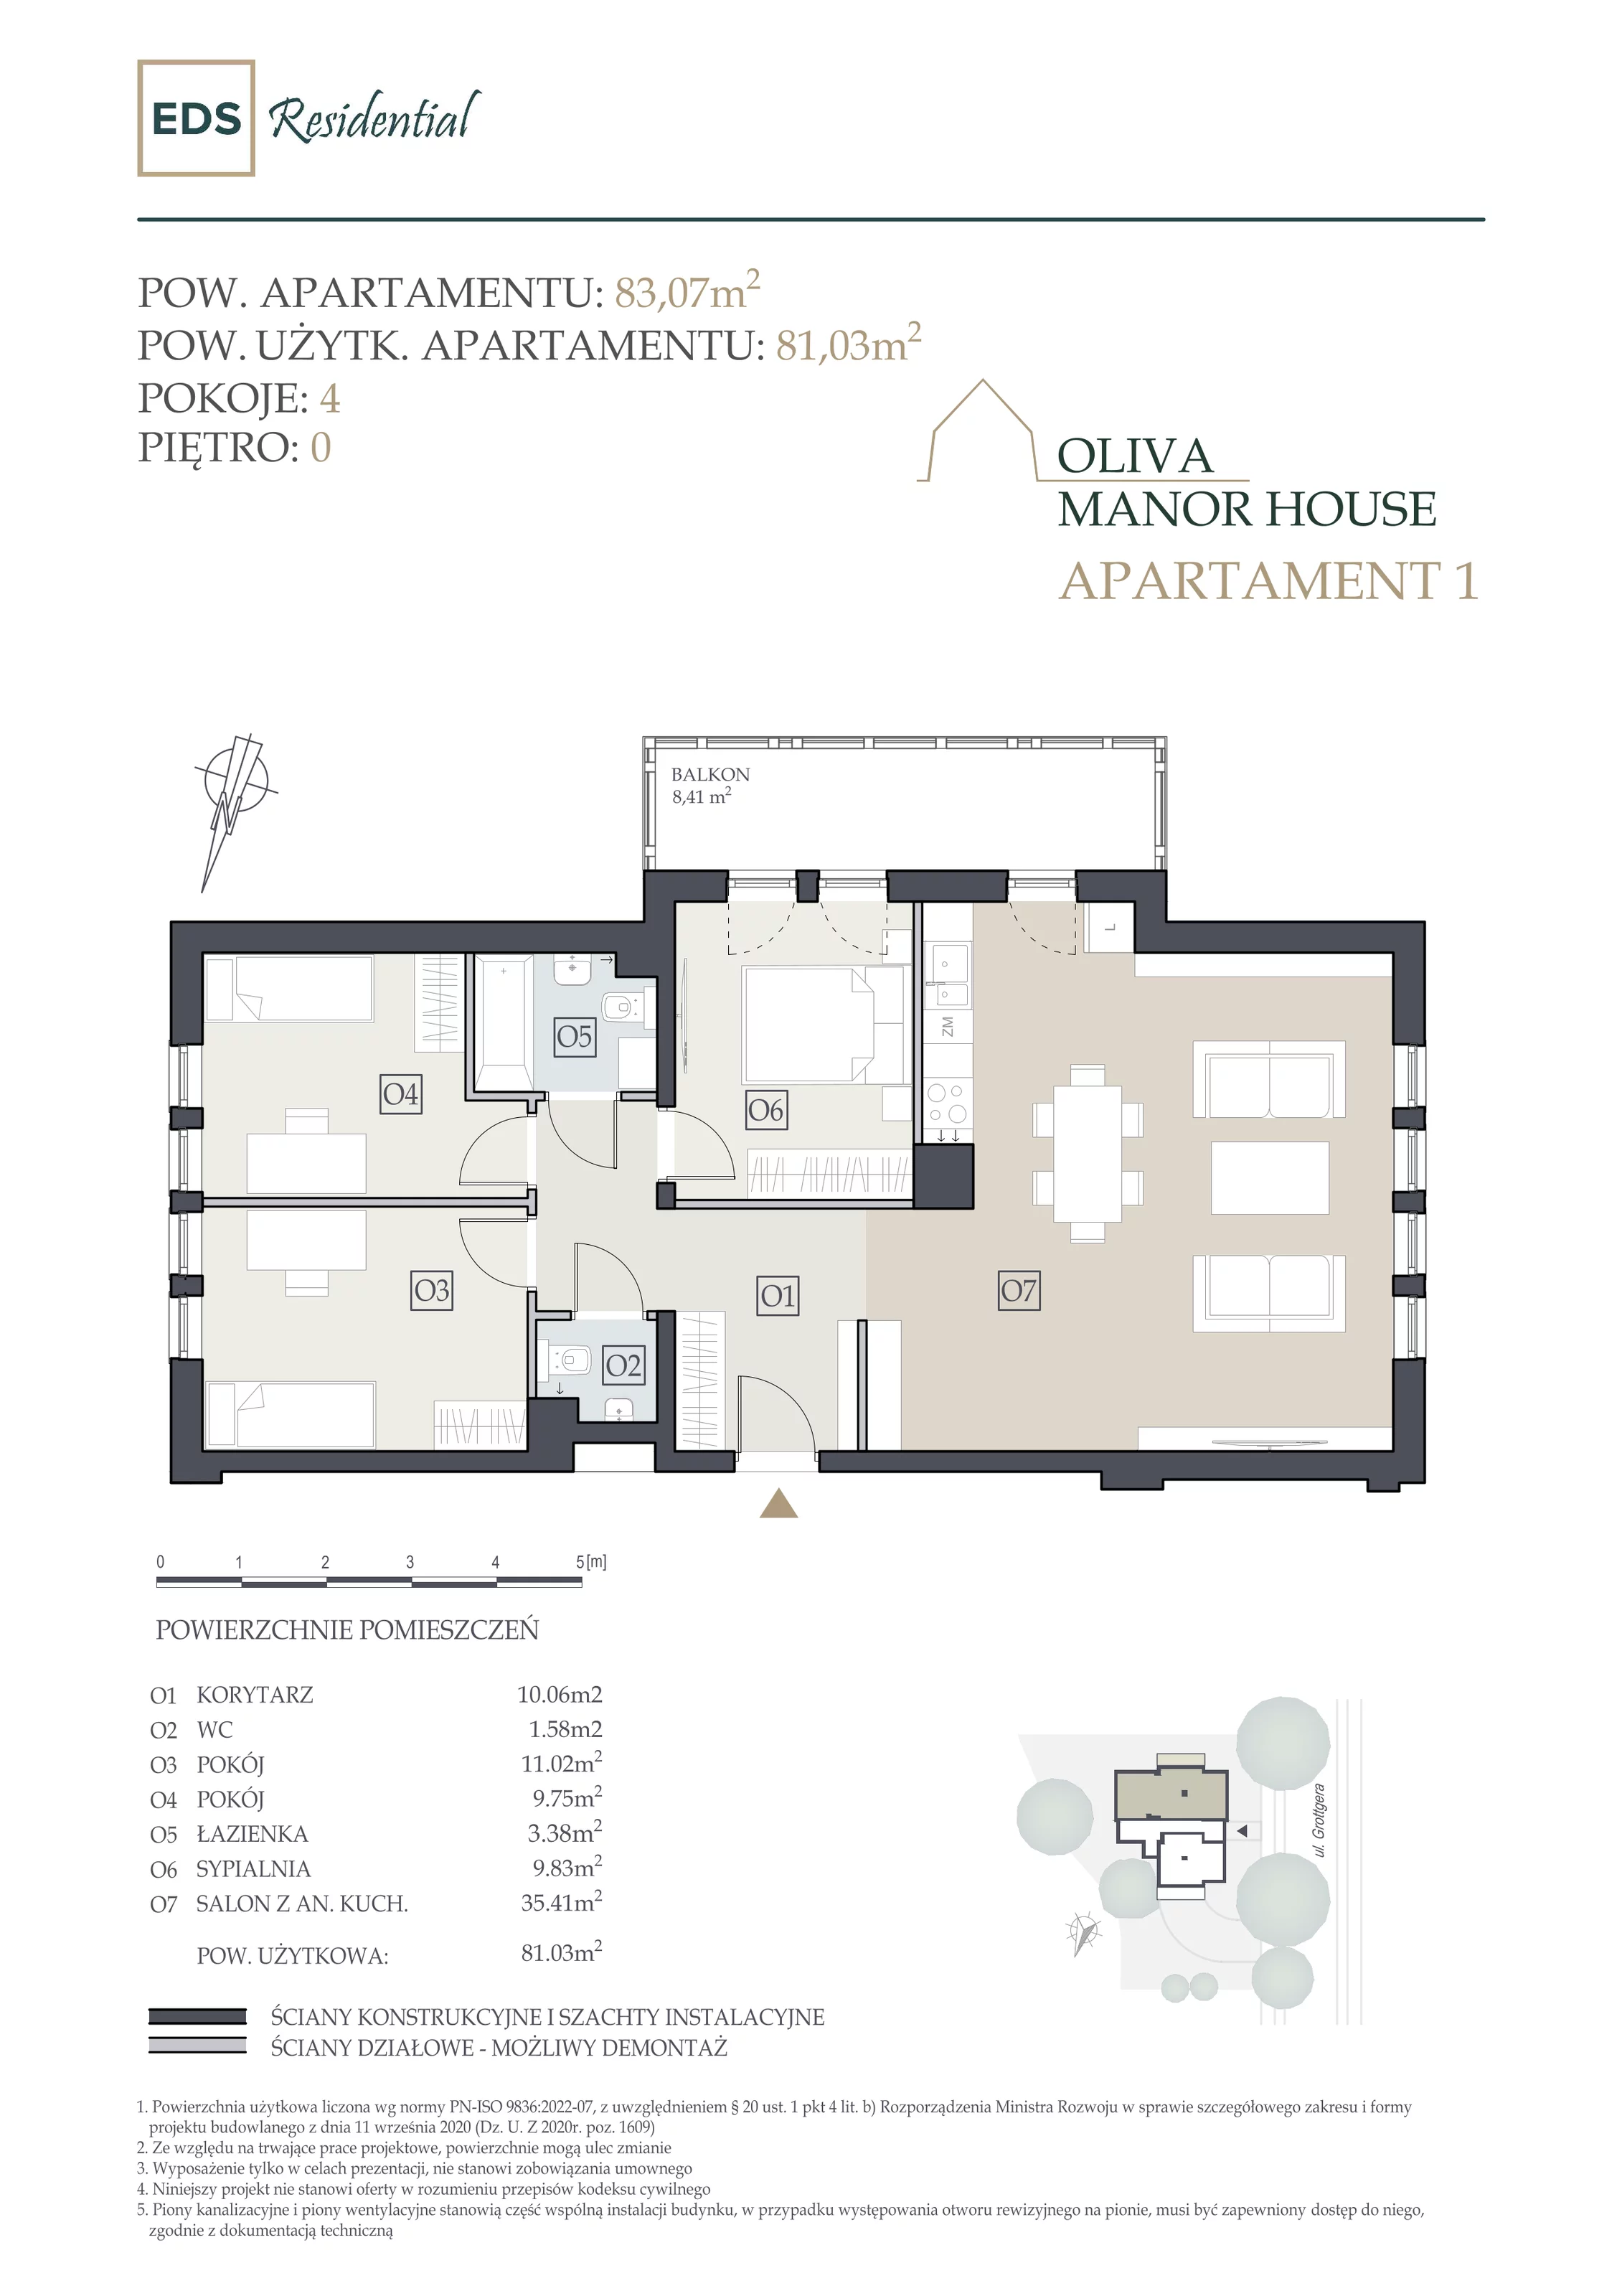 Mieszkanie 83,07 m², parter, oferta nr Apartament 1, Oliva Manor House, Gdańsk, Oliwa, ul. Artura Grottgera 3b 